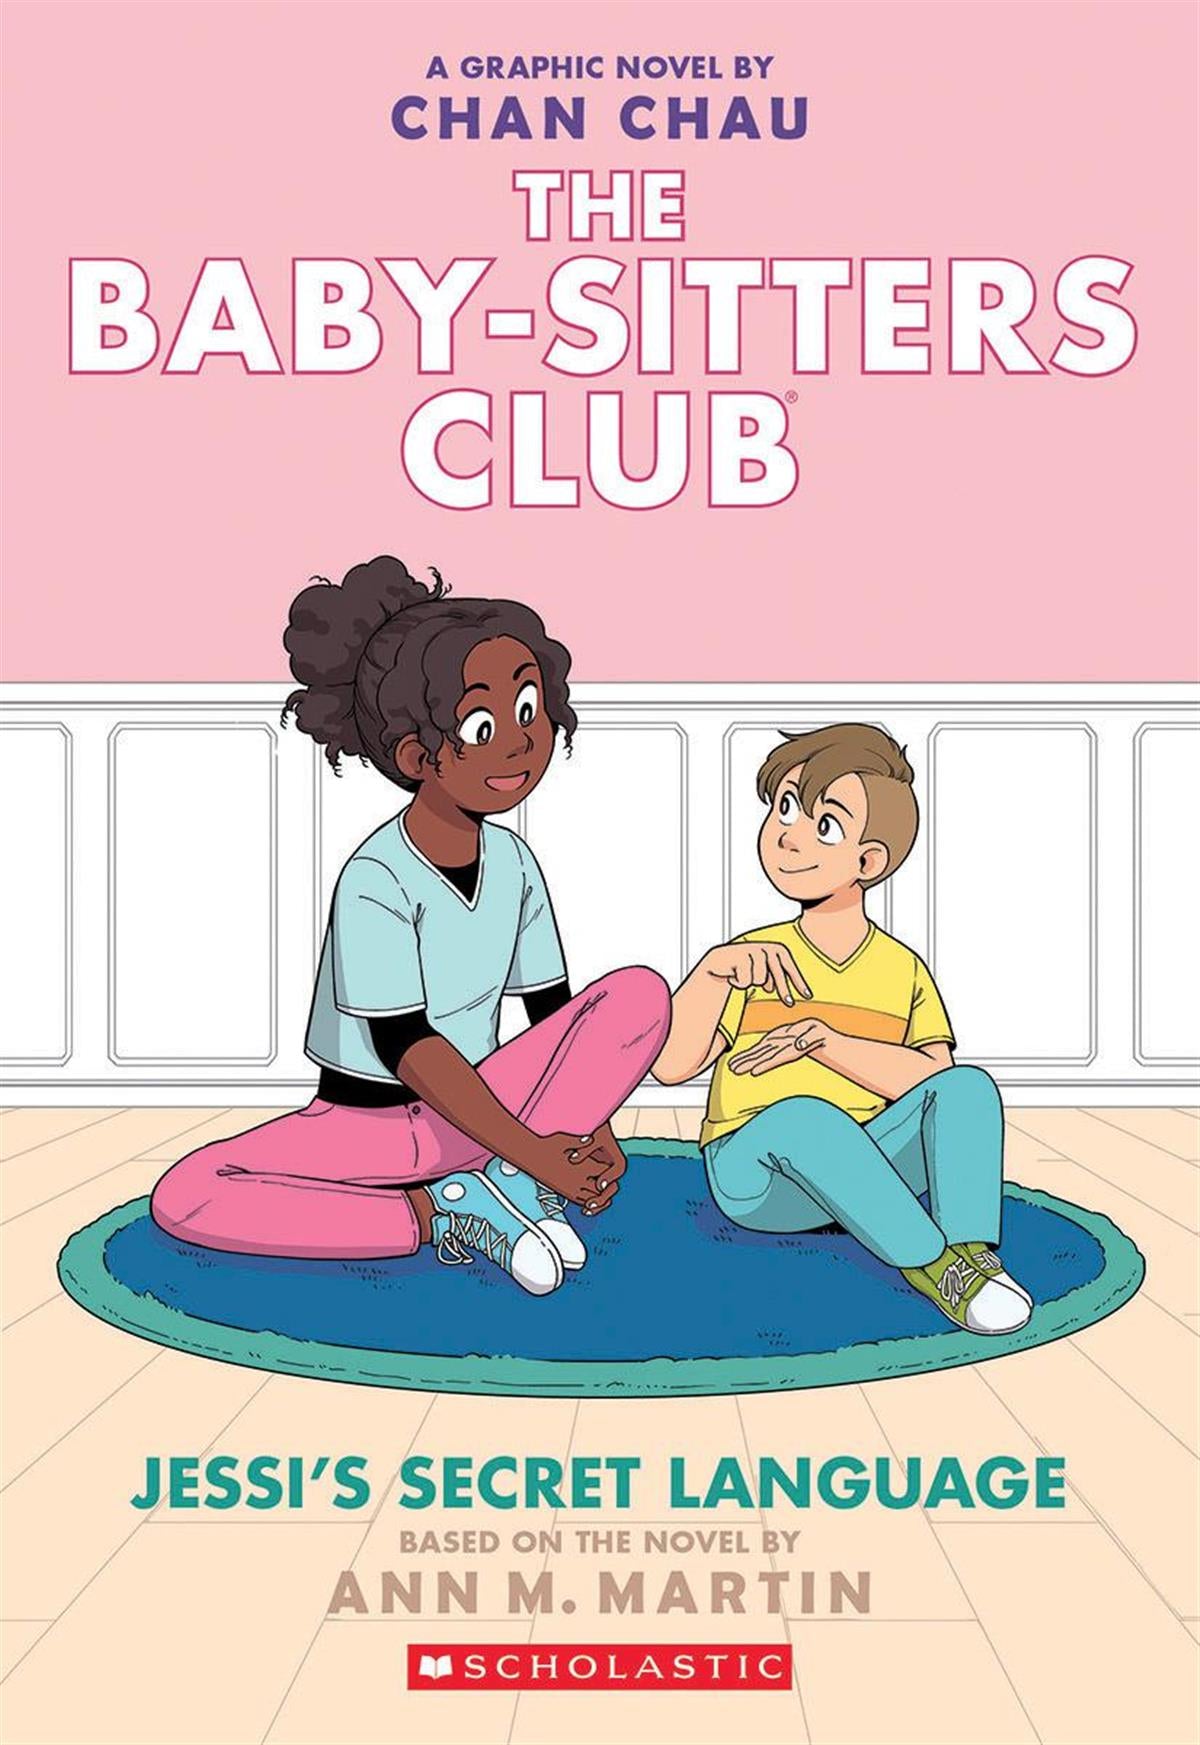 Jessi's Secret Language: A Graphic Novel (The Baby-sitters Club #12)